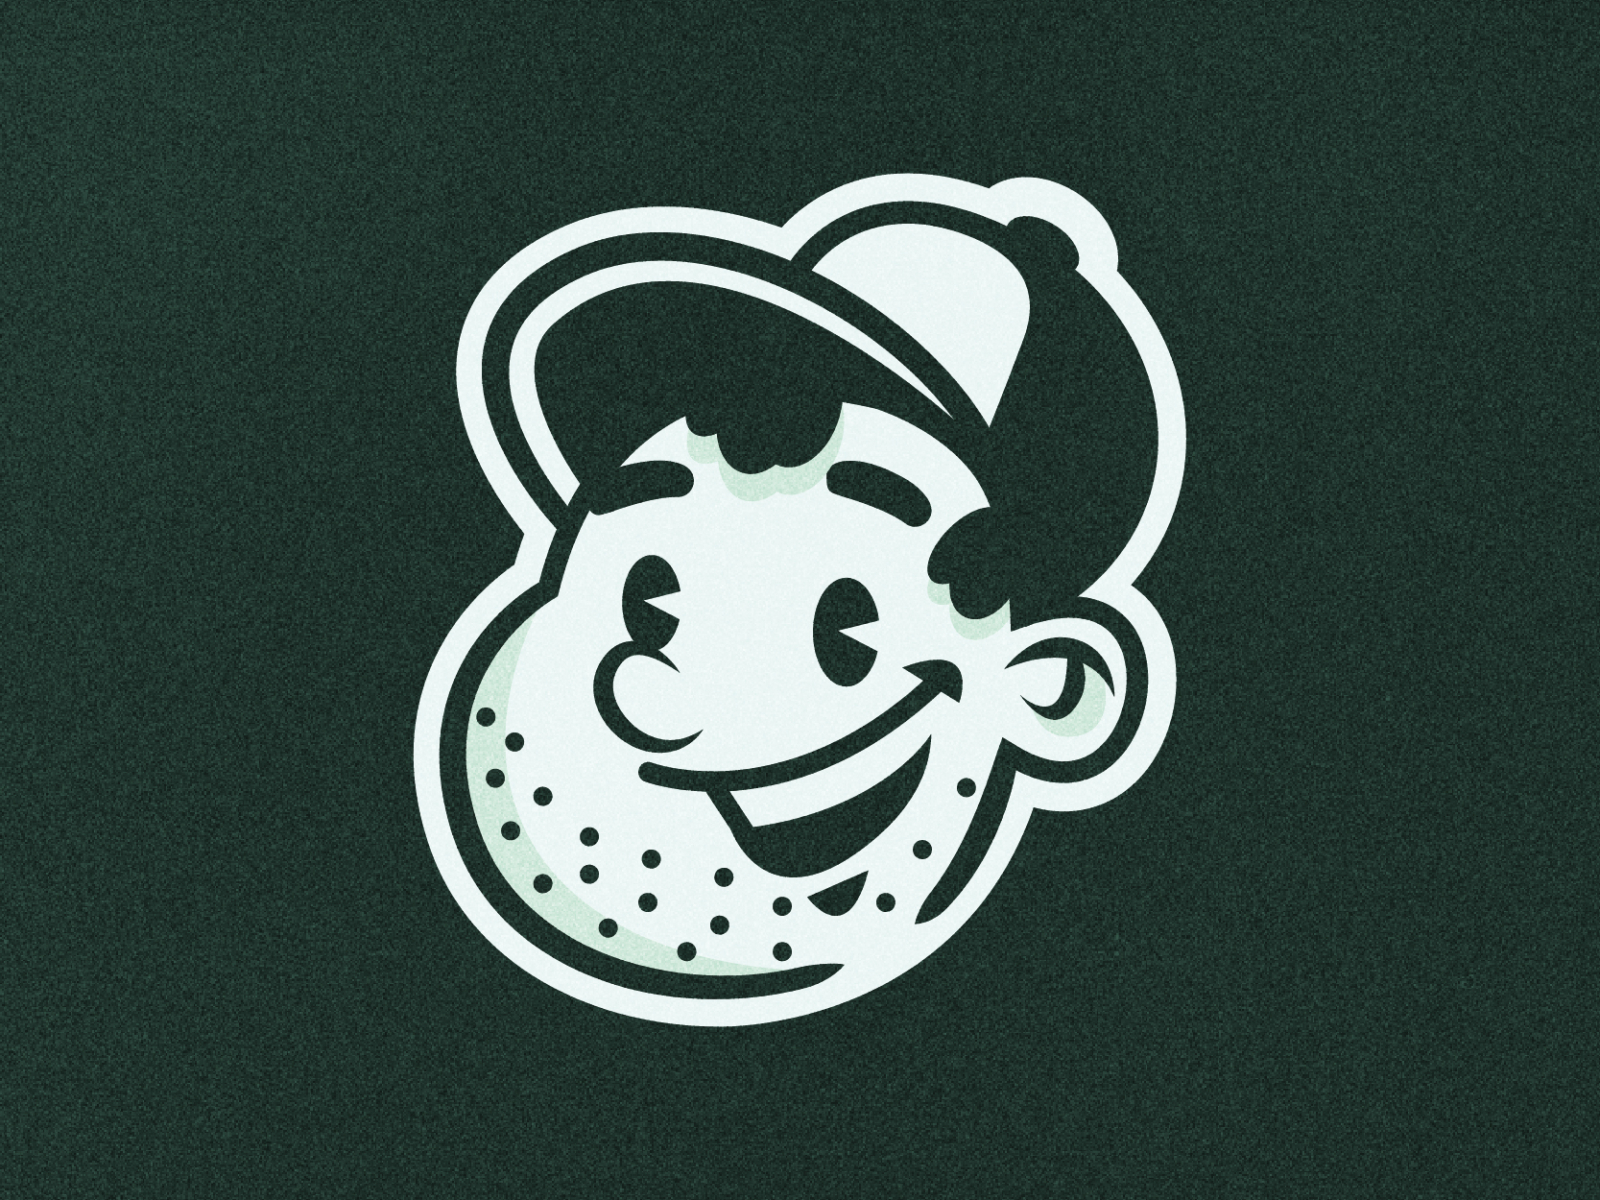 My new avatar avatar illustration mascot oreskovicdesign retro